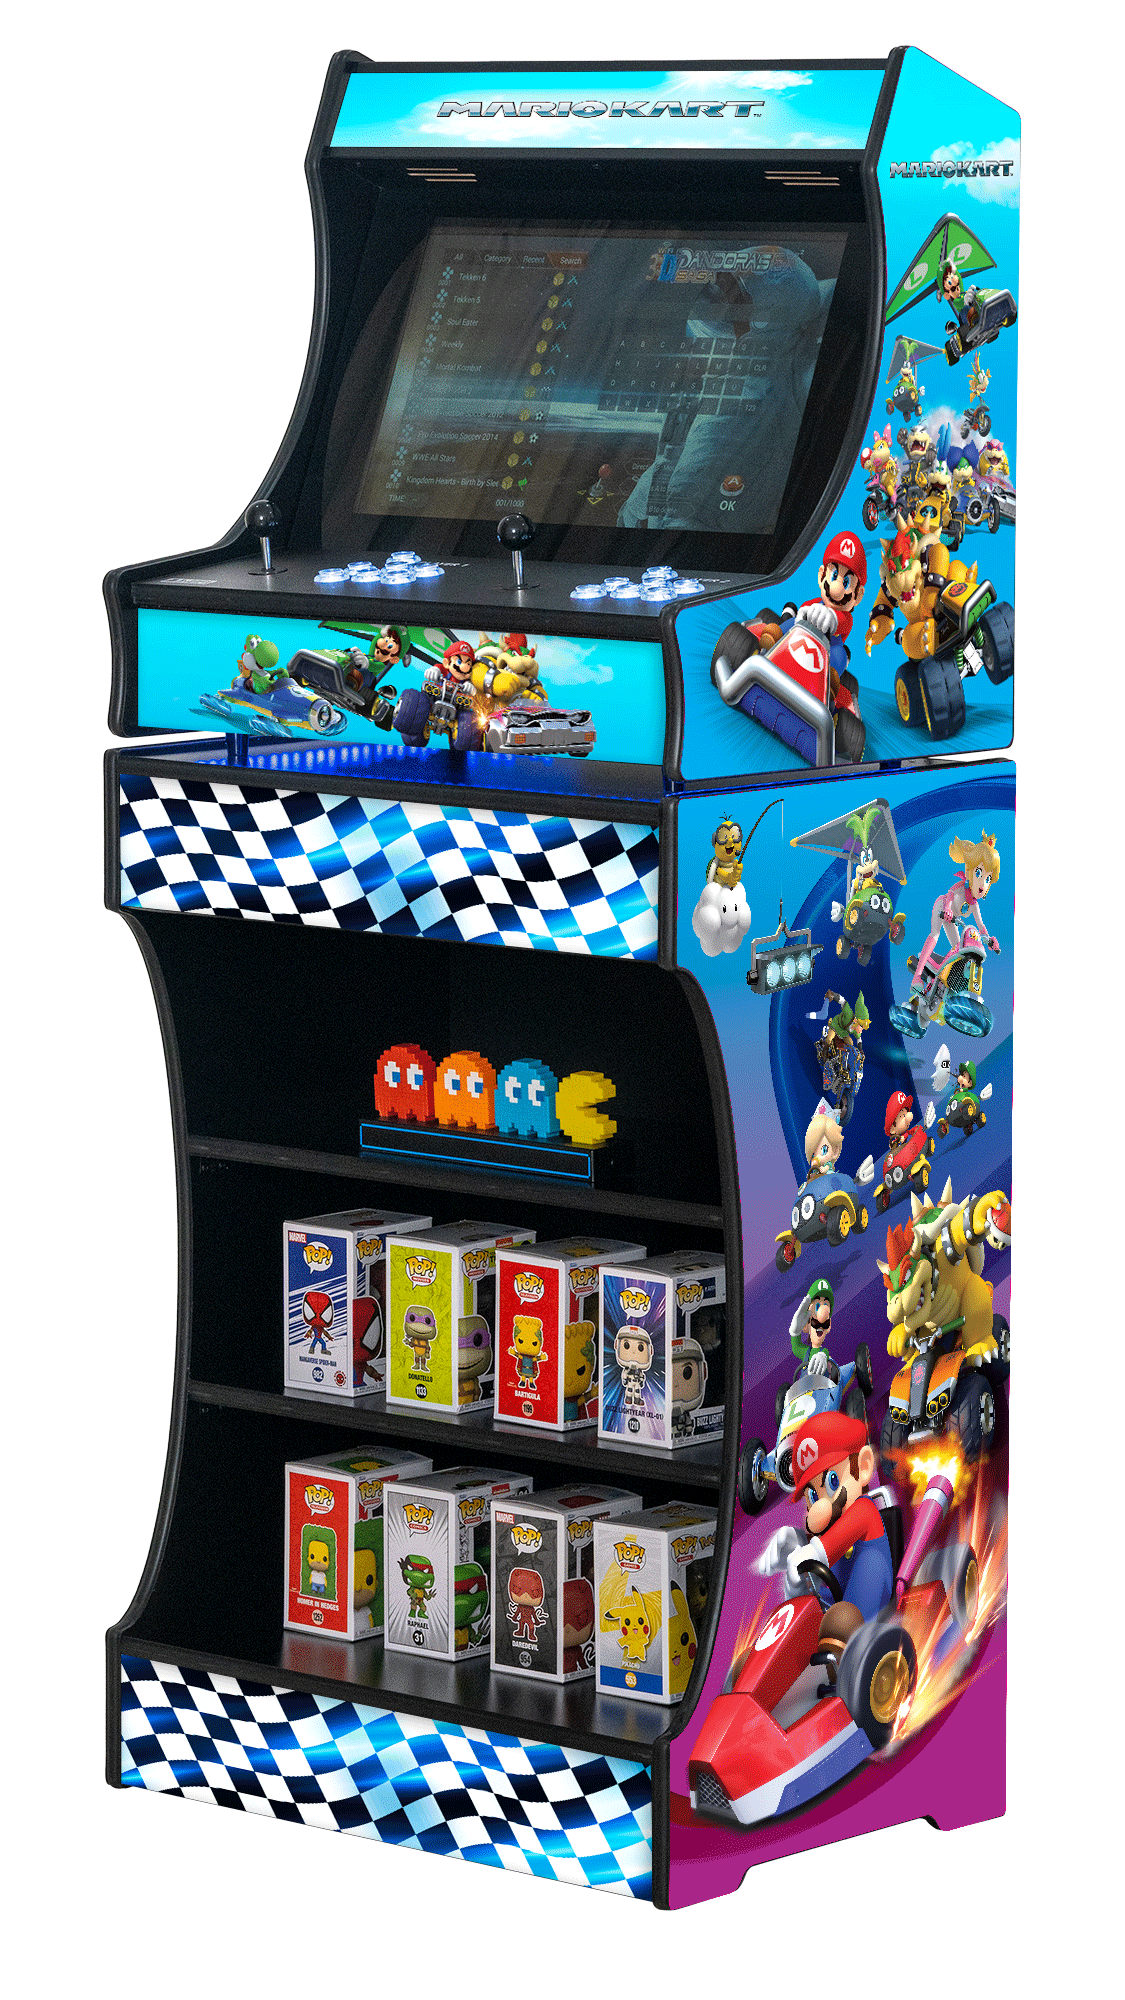 Upright 24" Arcade Machine